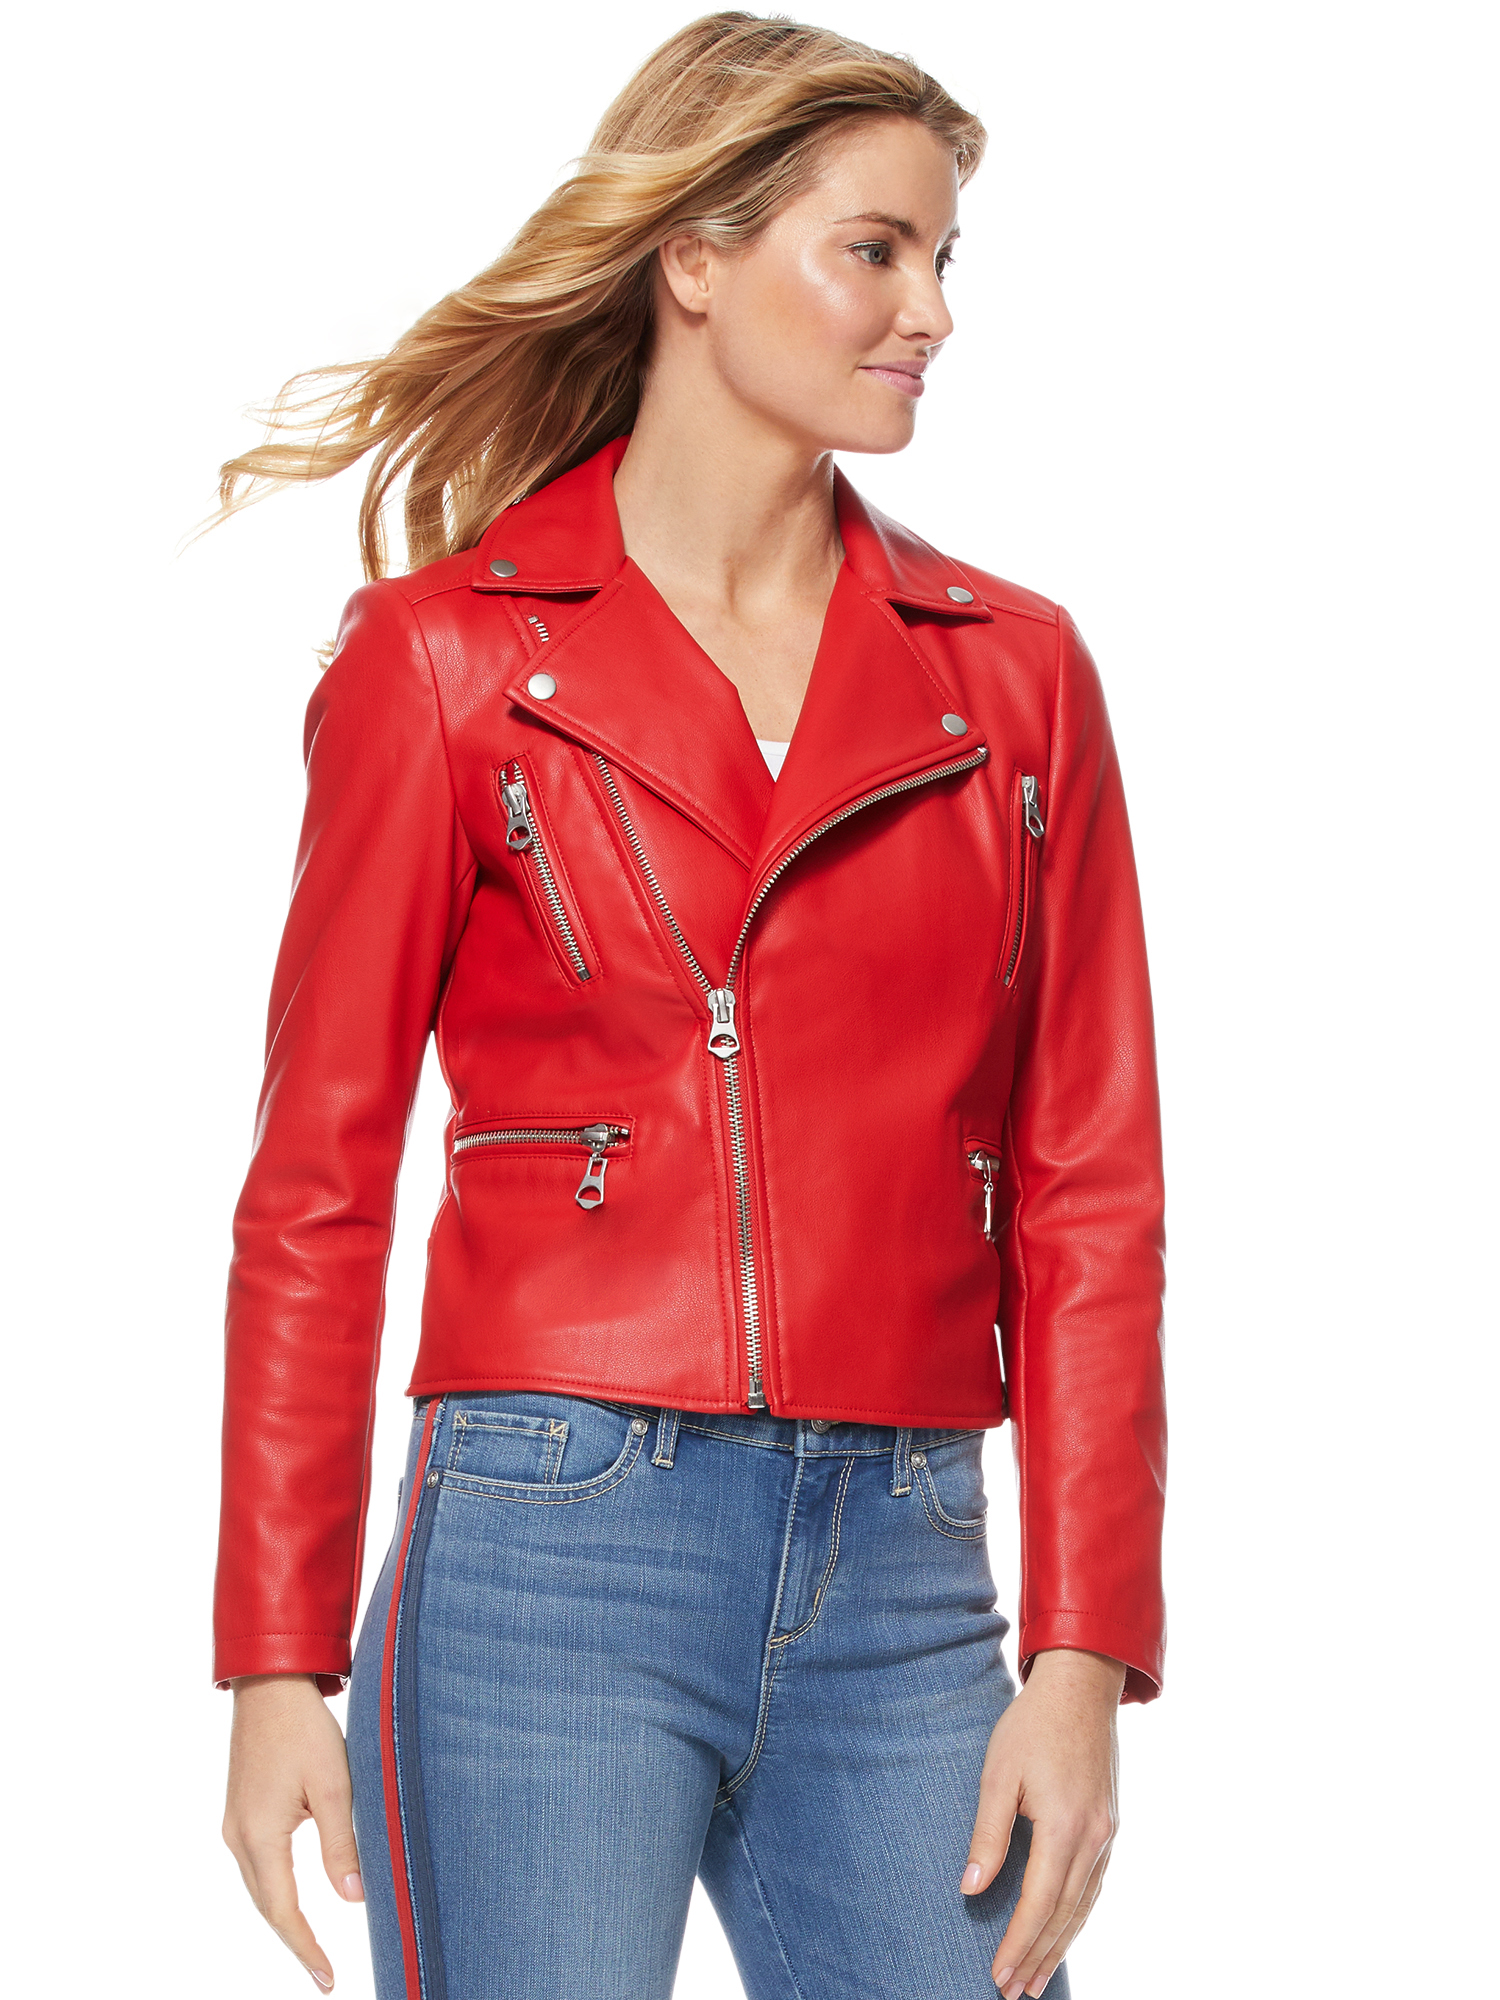 Scoop Women's Faux Leather Moto Jacket - image 4 of 6